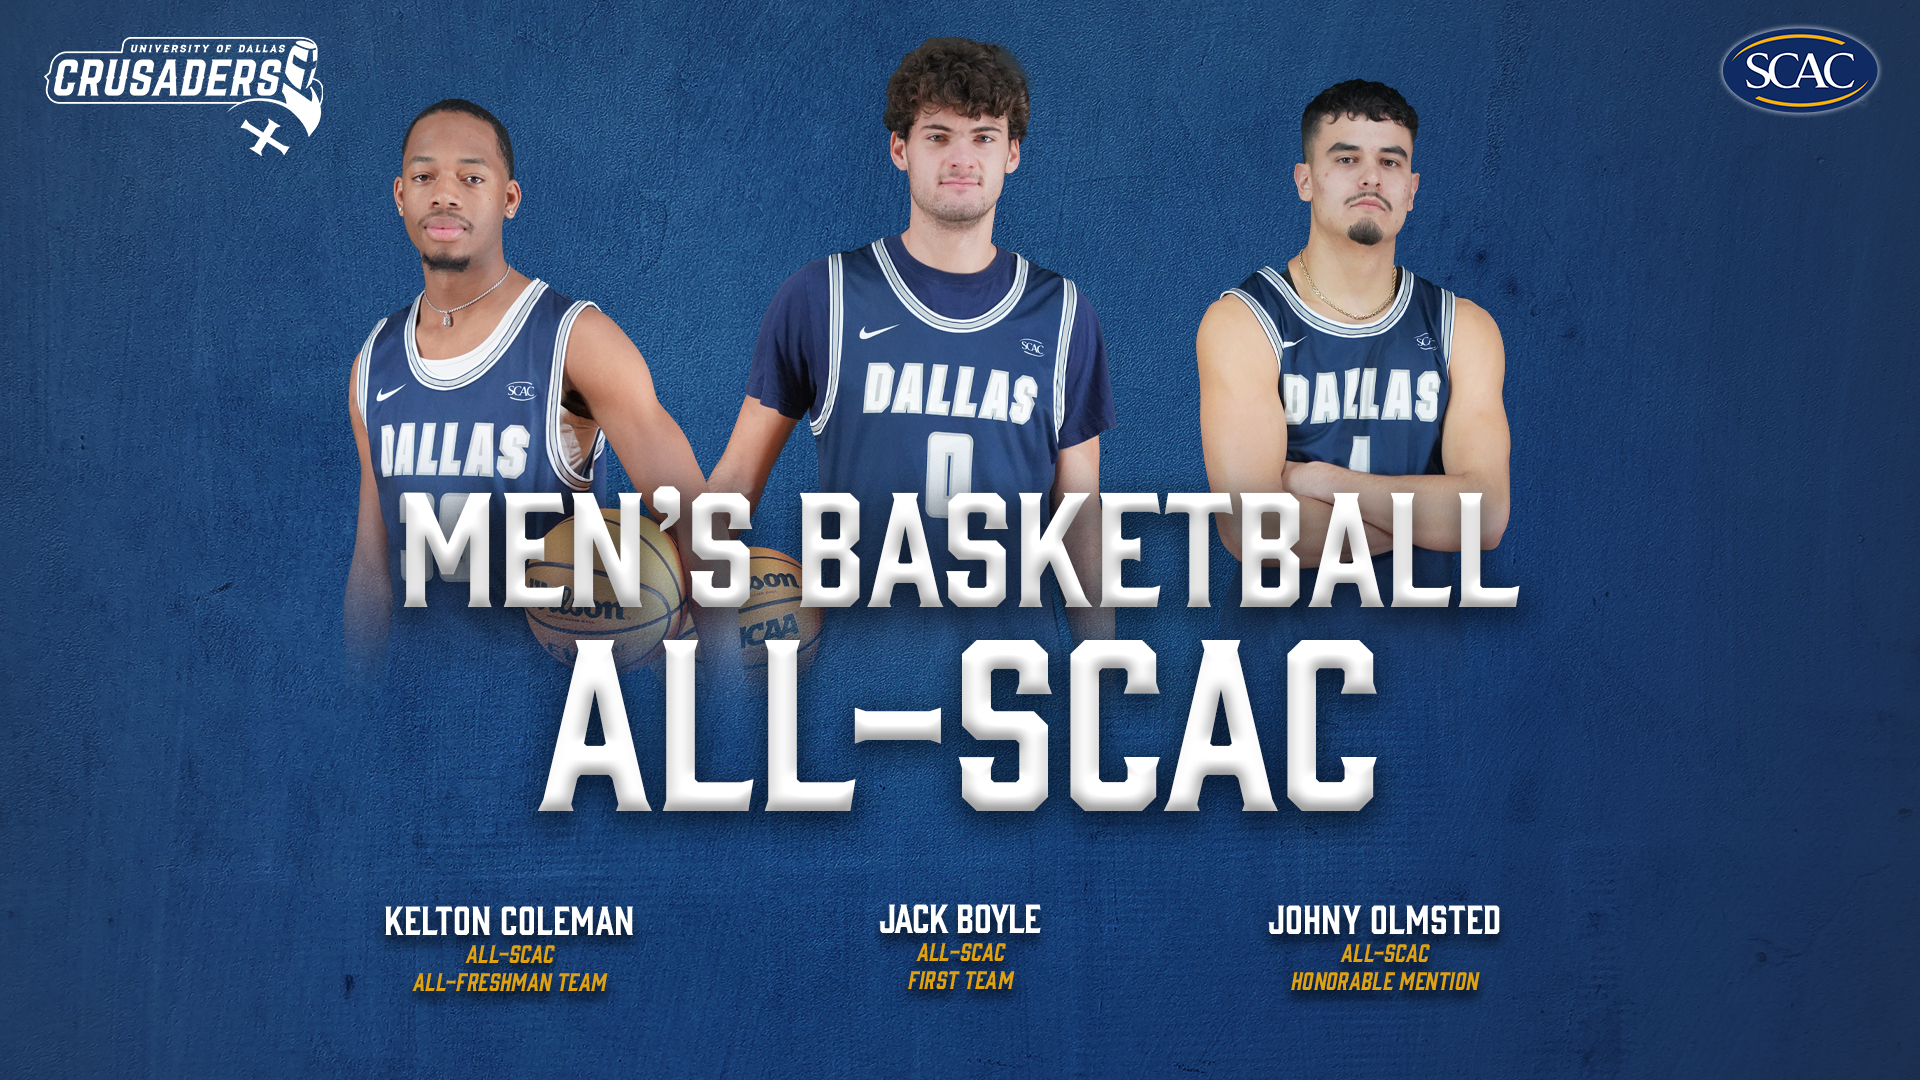 Three Crusaders Earn Men's Basketball All-SCAC Honors